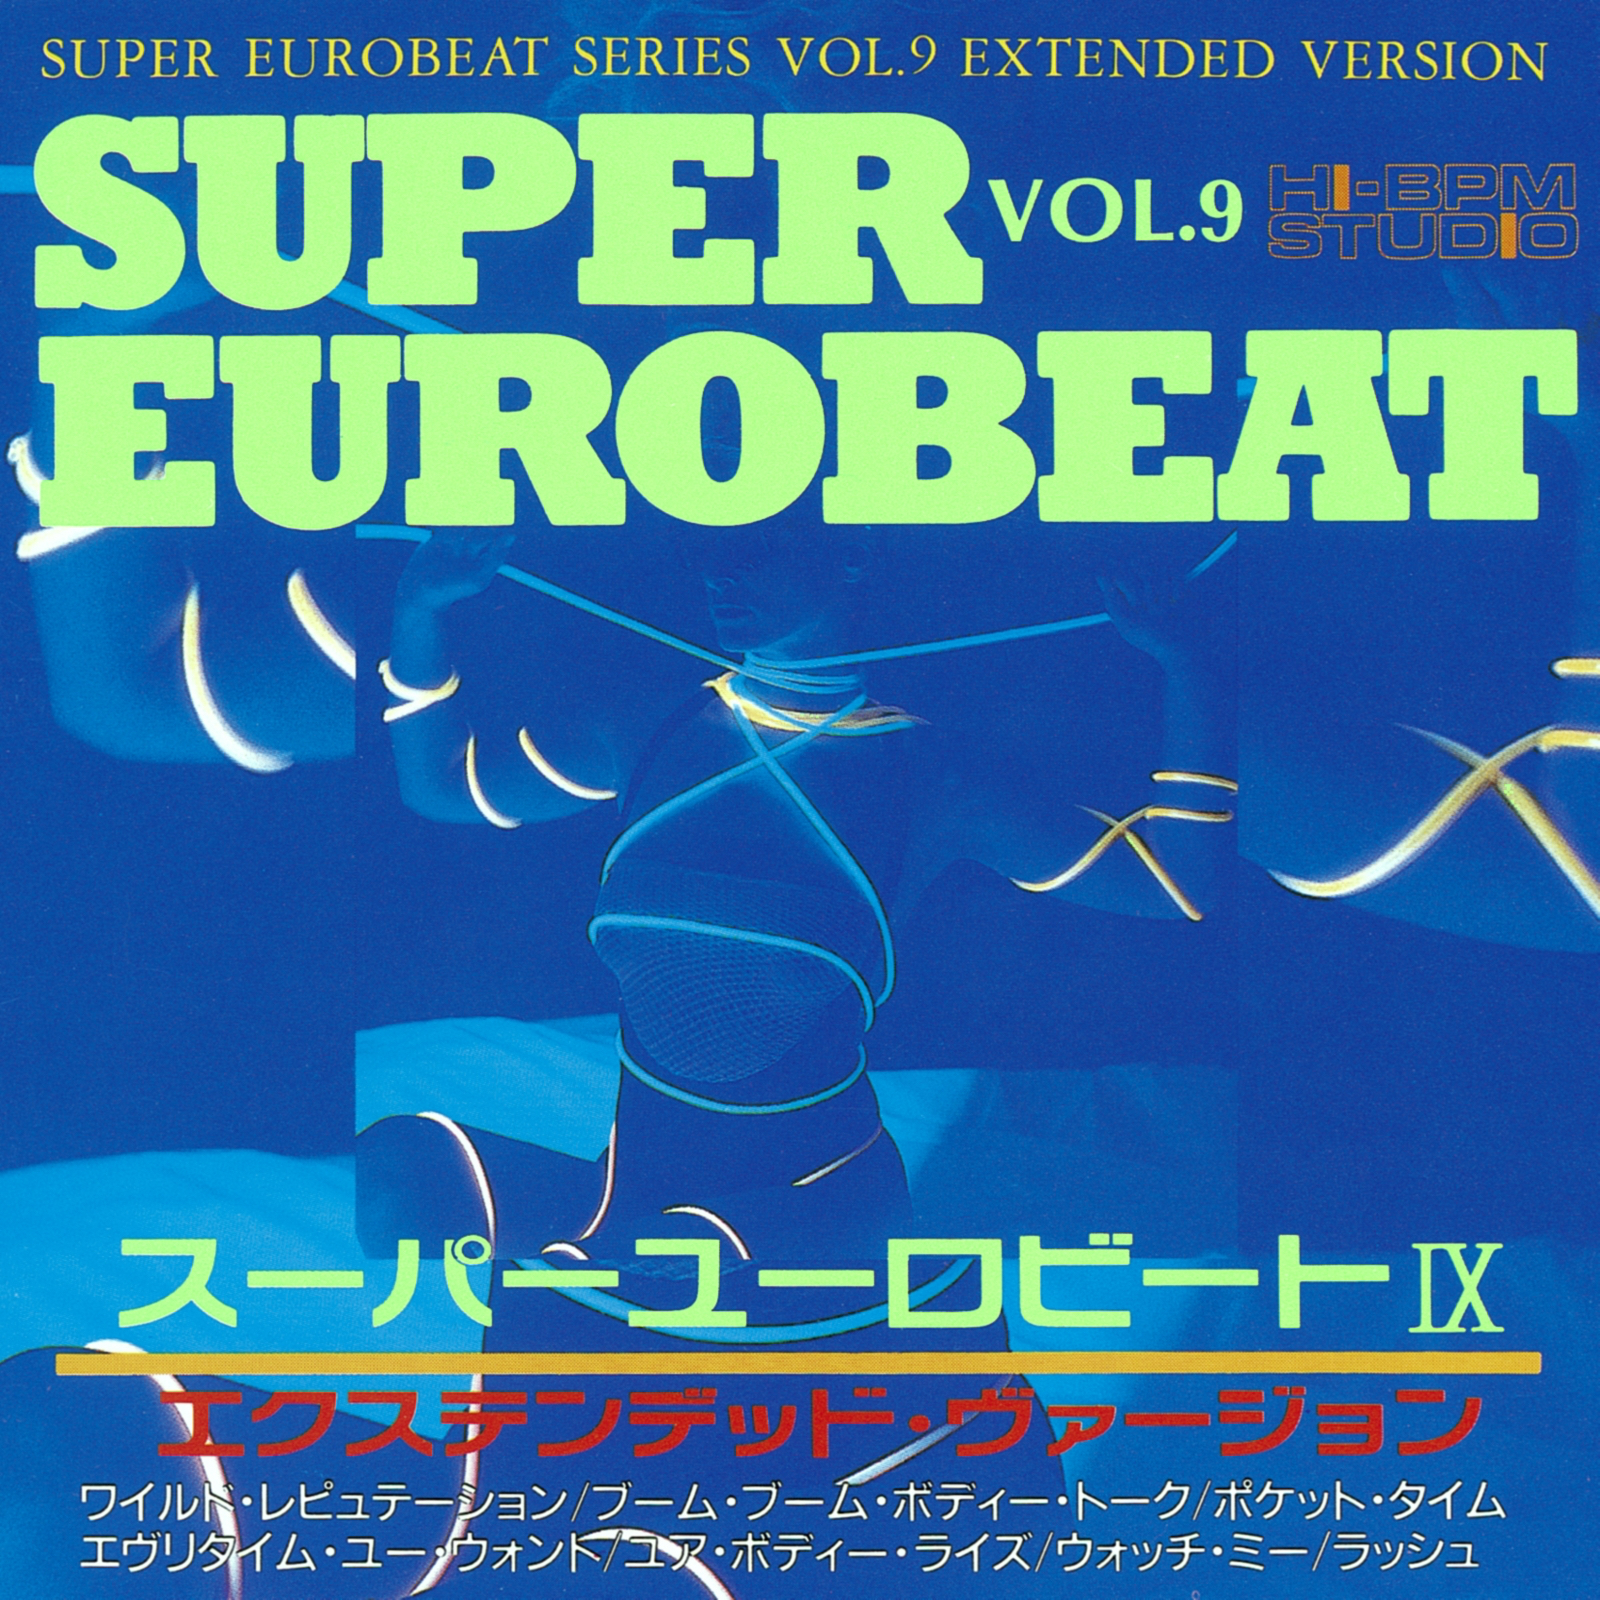 Super Eurobeat Vol. 9 | Eurobeat Wiki | Fandom